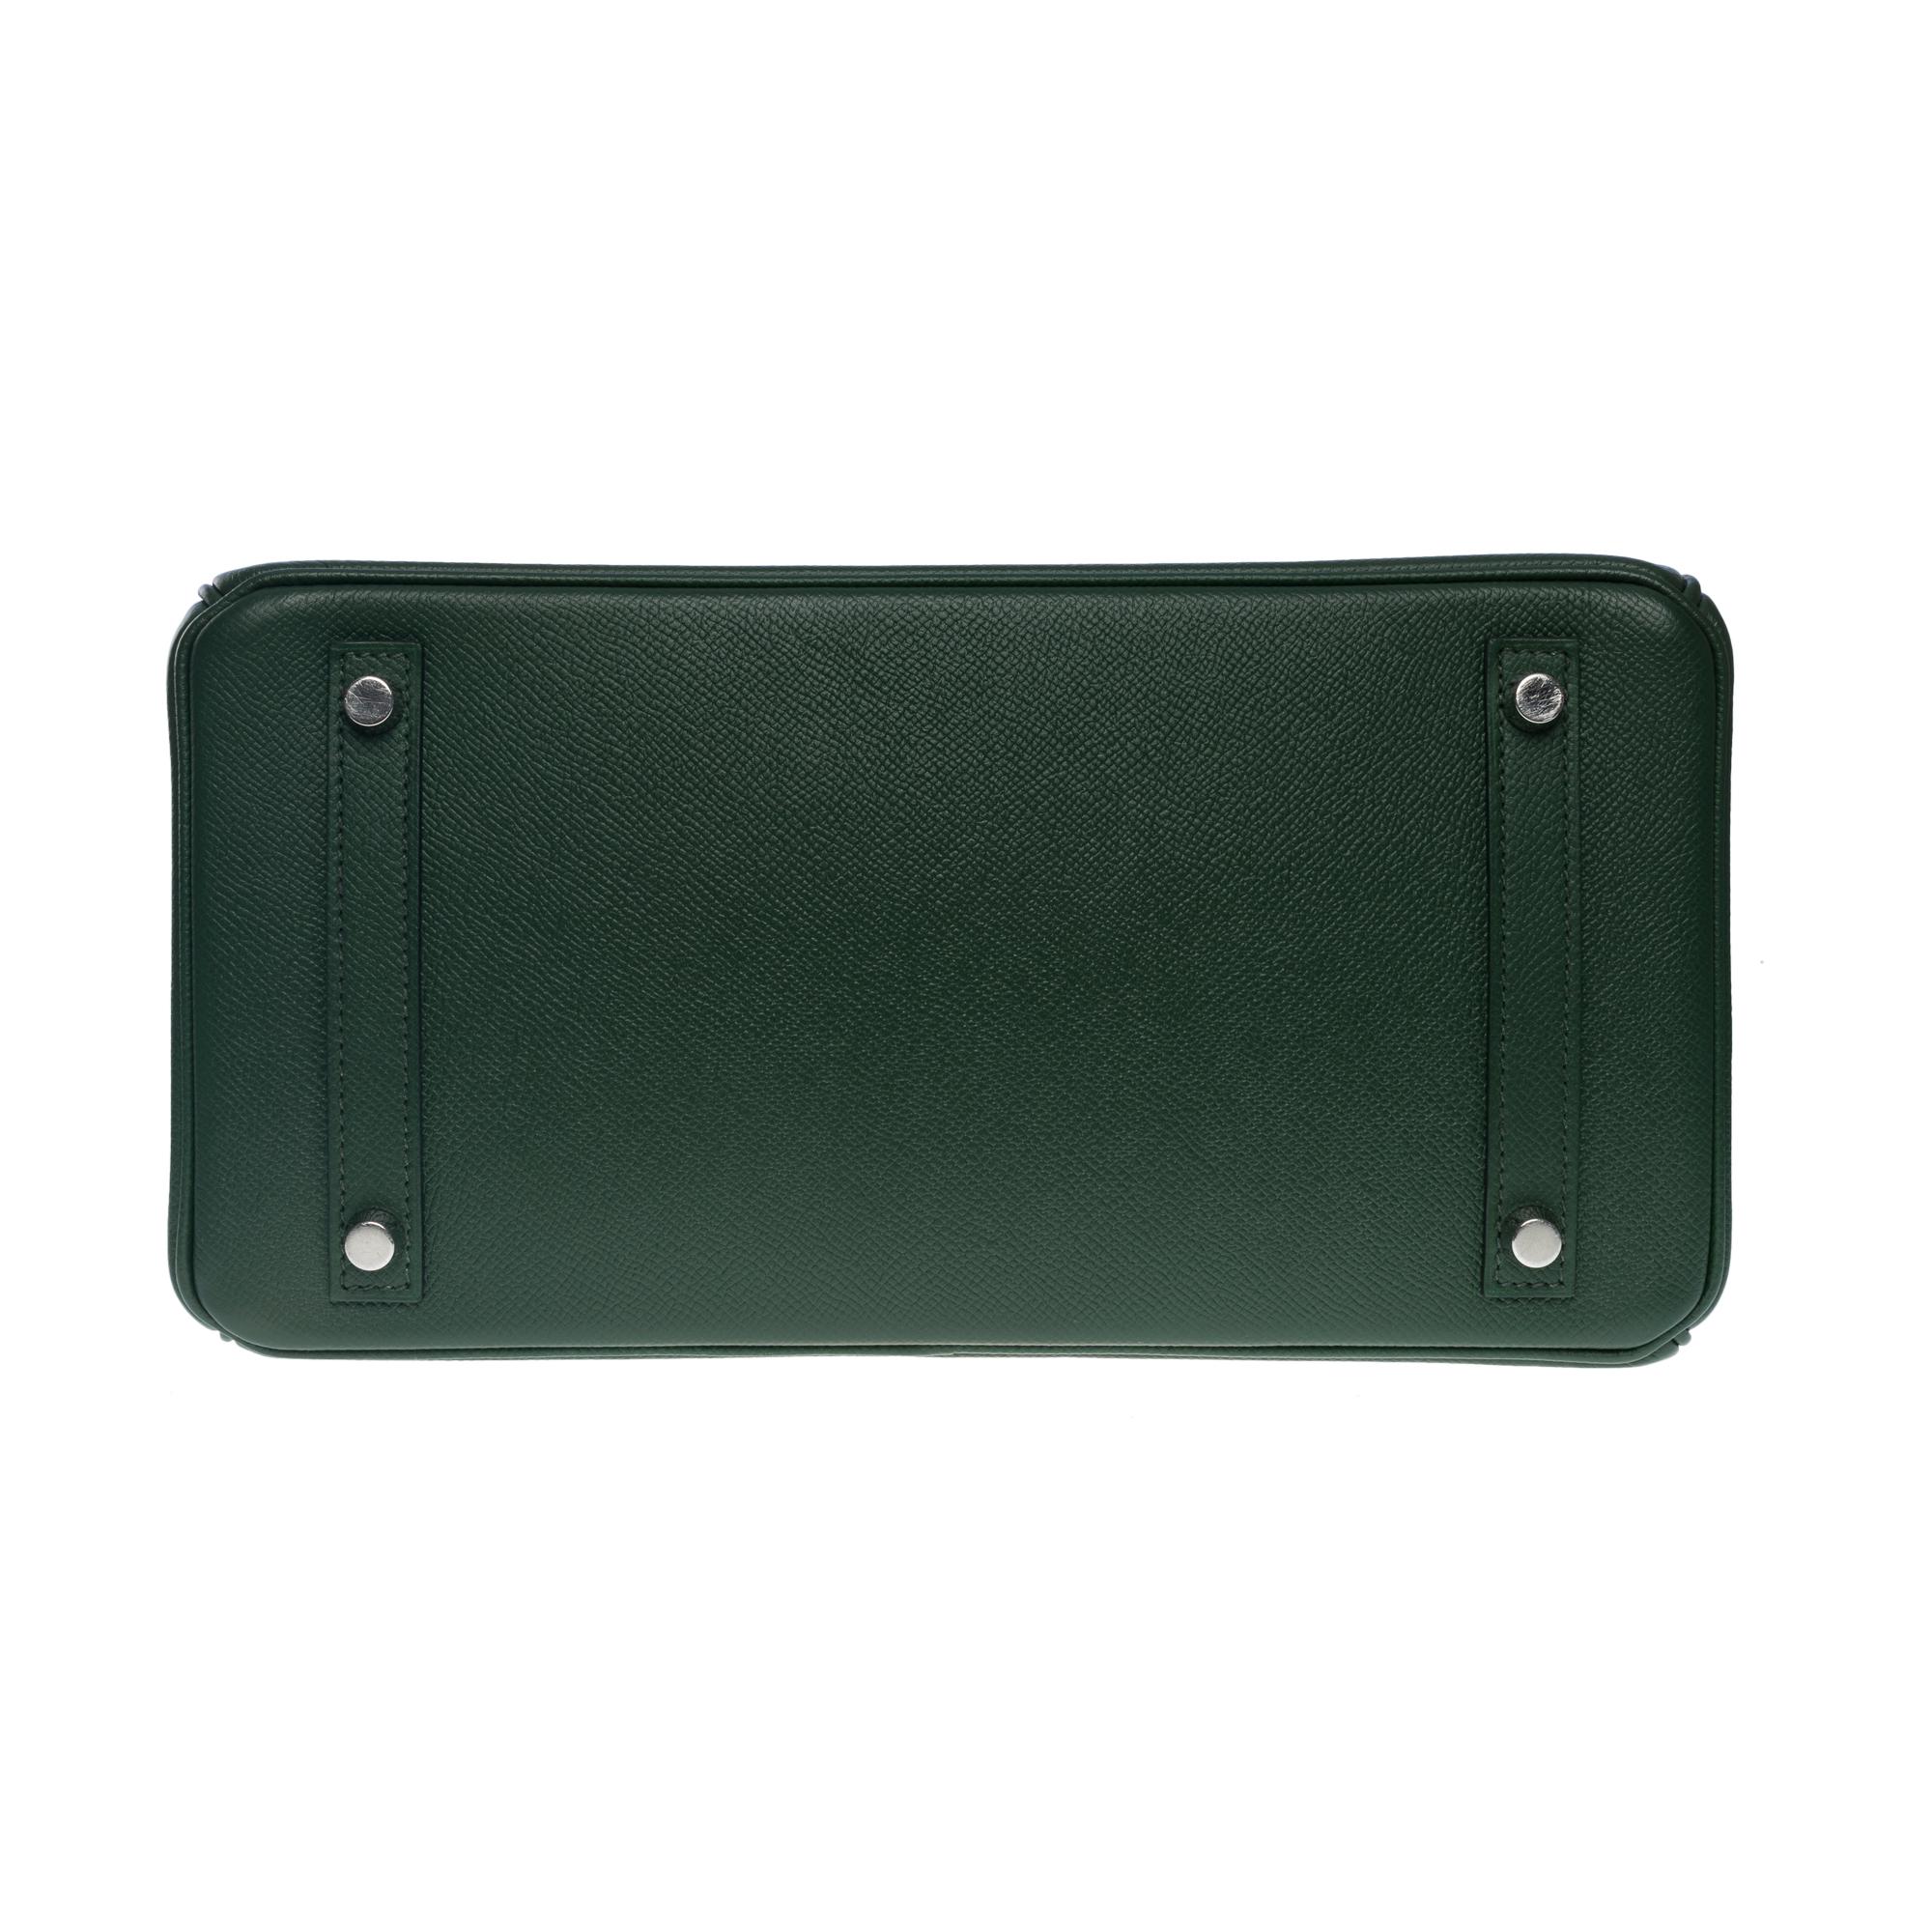 Amazing & Rare Hermès Birkin 30 handbag in Vert Anglais Epsom leather, SHW For Sale 5